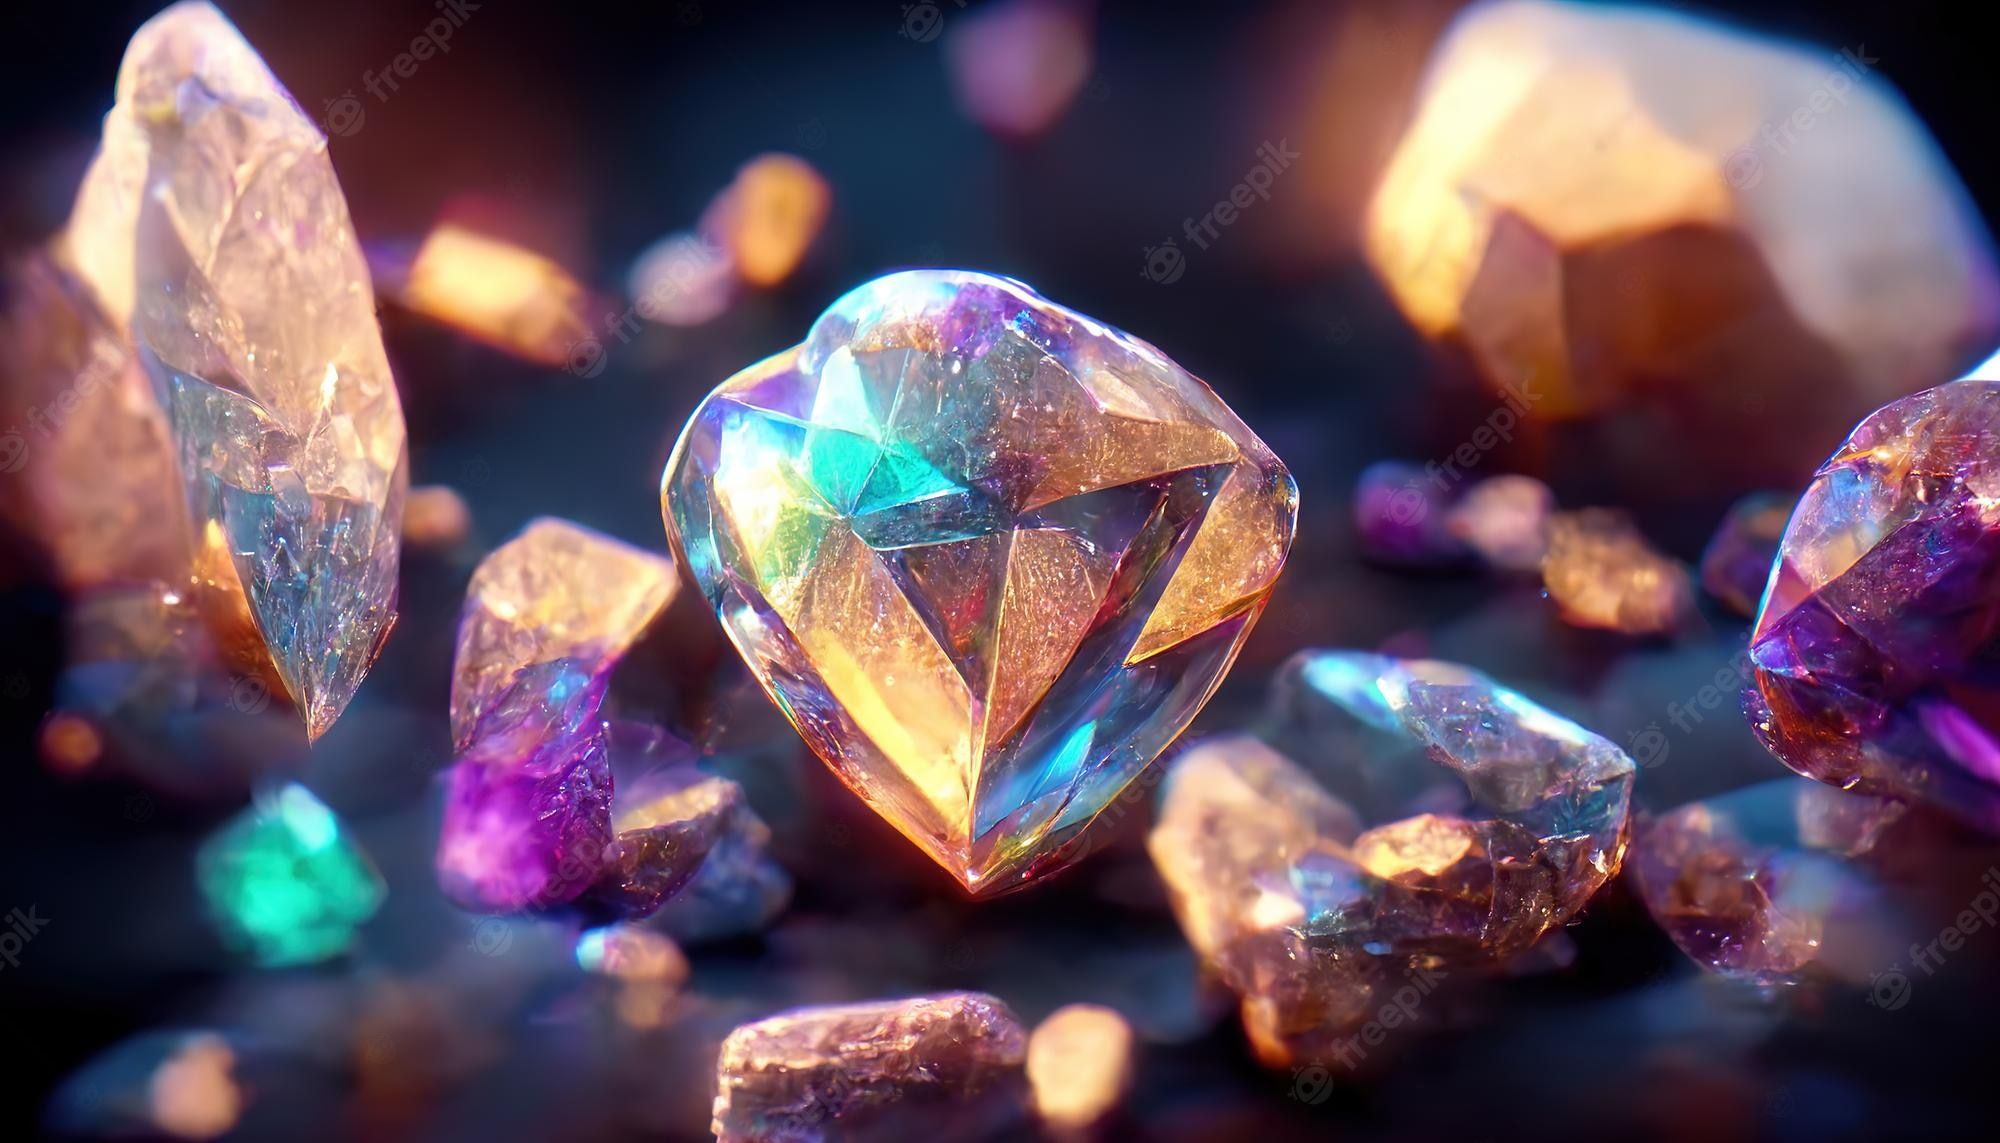 Premium Photo. Shiny gemstones diamonds crystals abstract background beautiful luxury wallpaper digital art